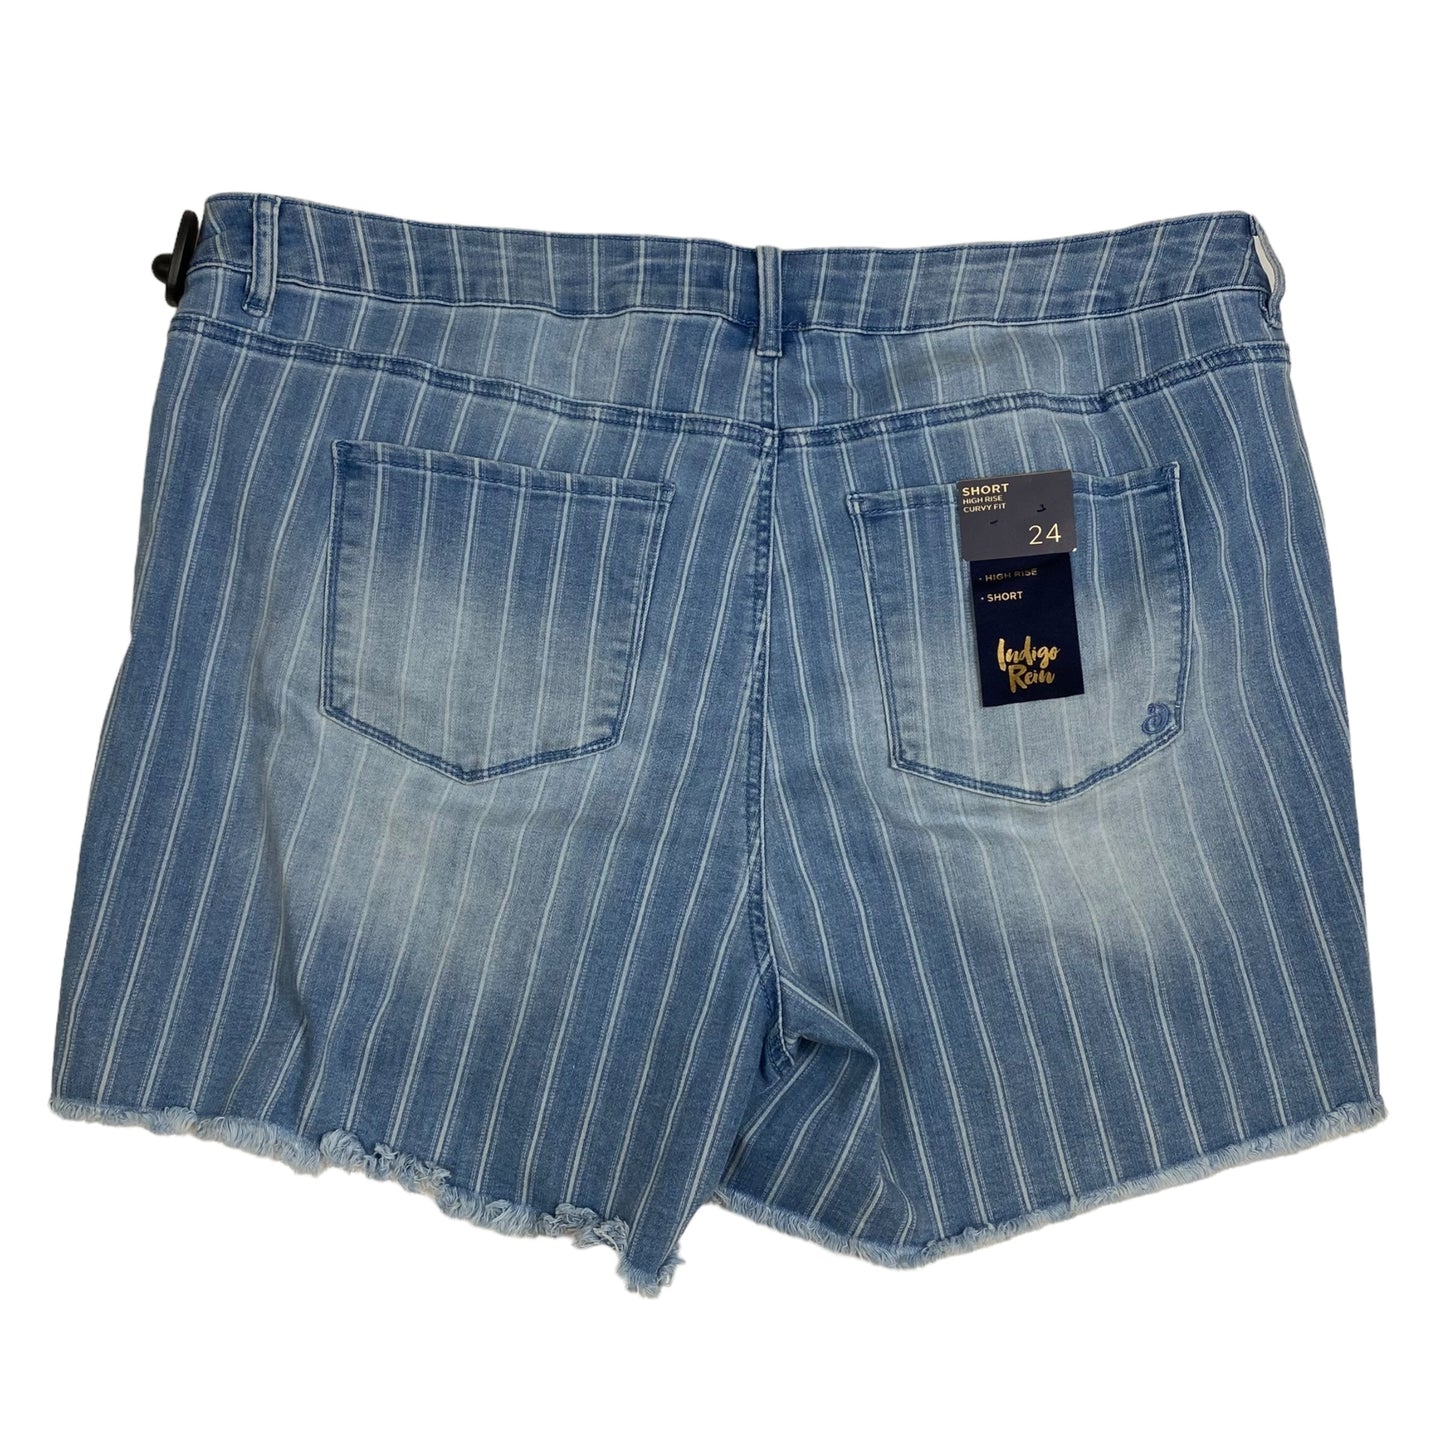 Shorts By Indigo Rein  Size: 3x